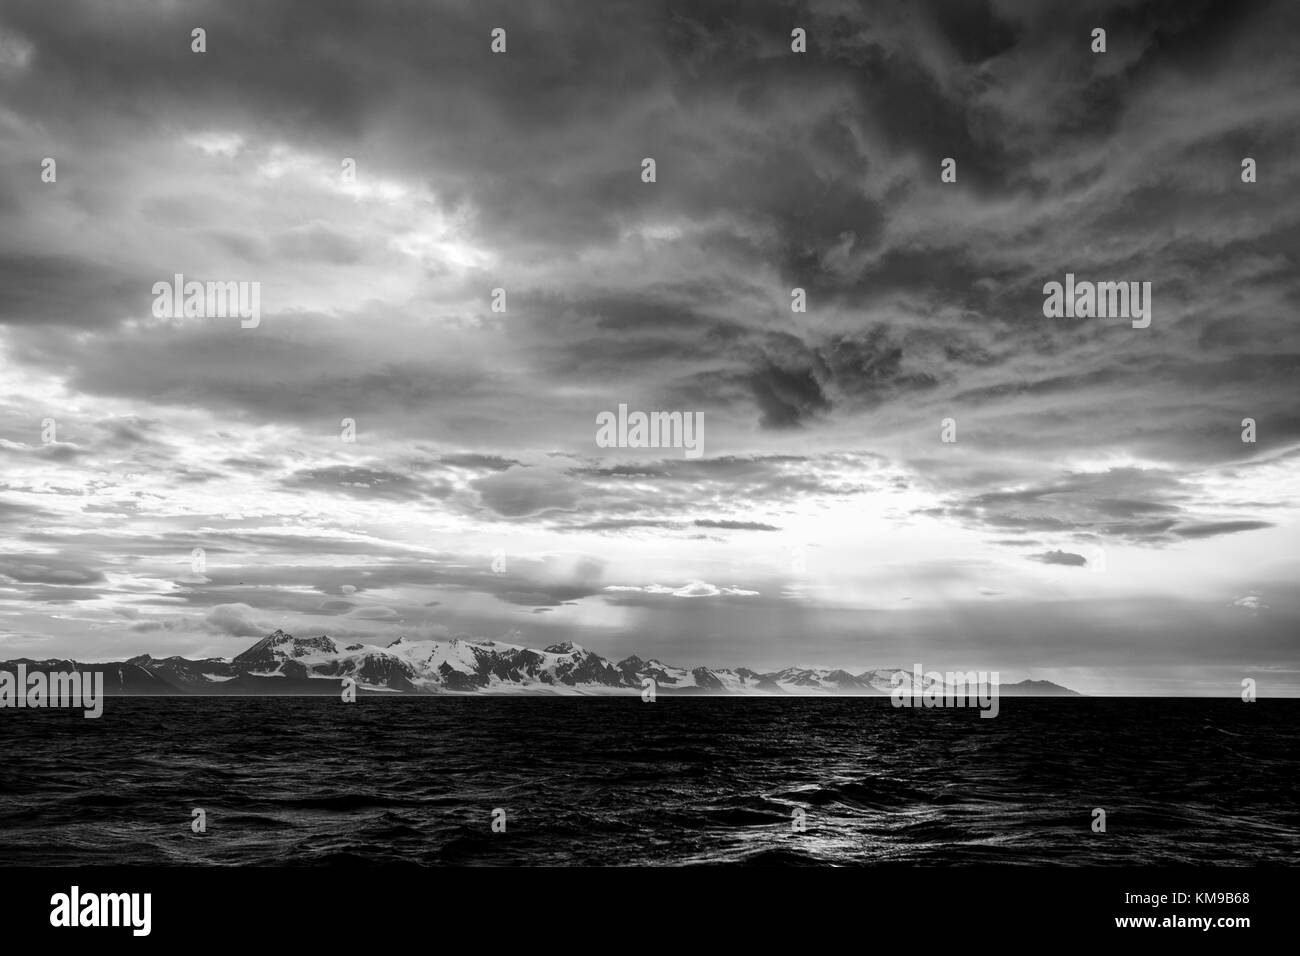 Empolle, nubes de tormenta se reúnen frente a la costa de Svalbard Foto de stock